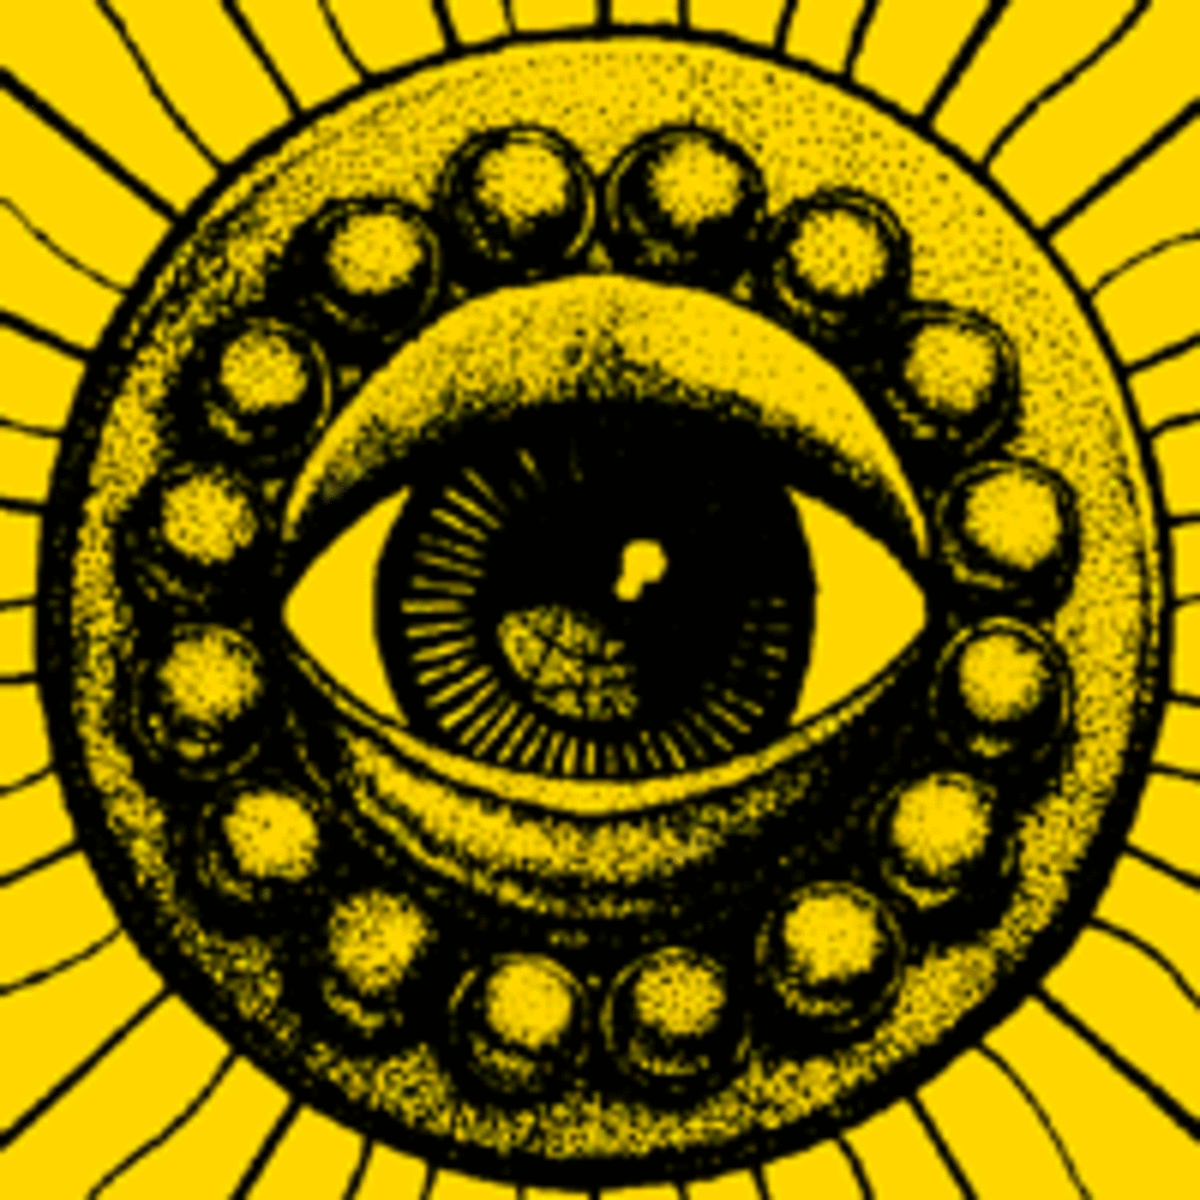 The Eye of Agamotto